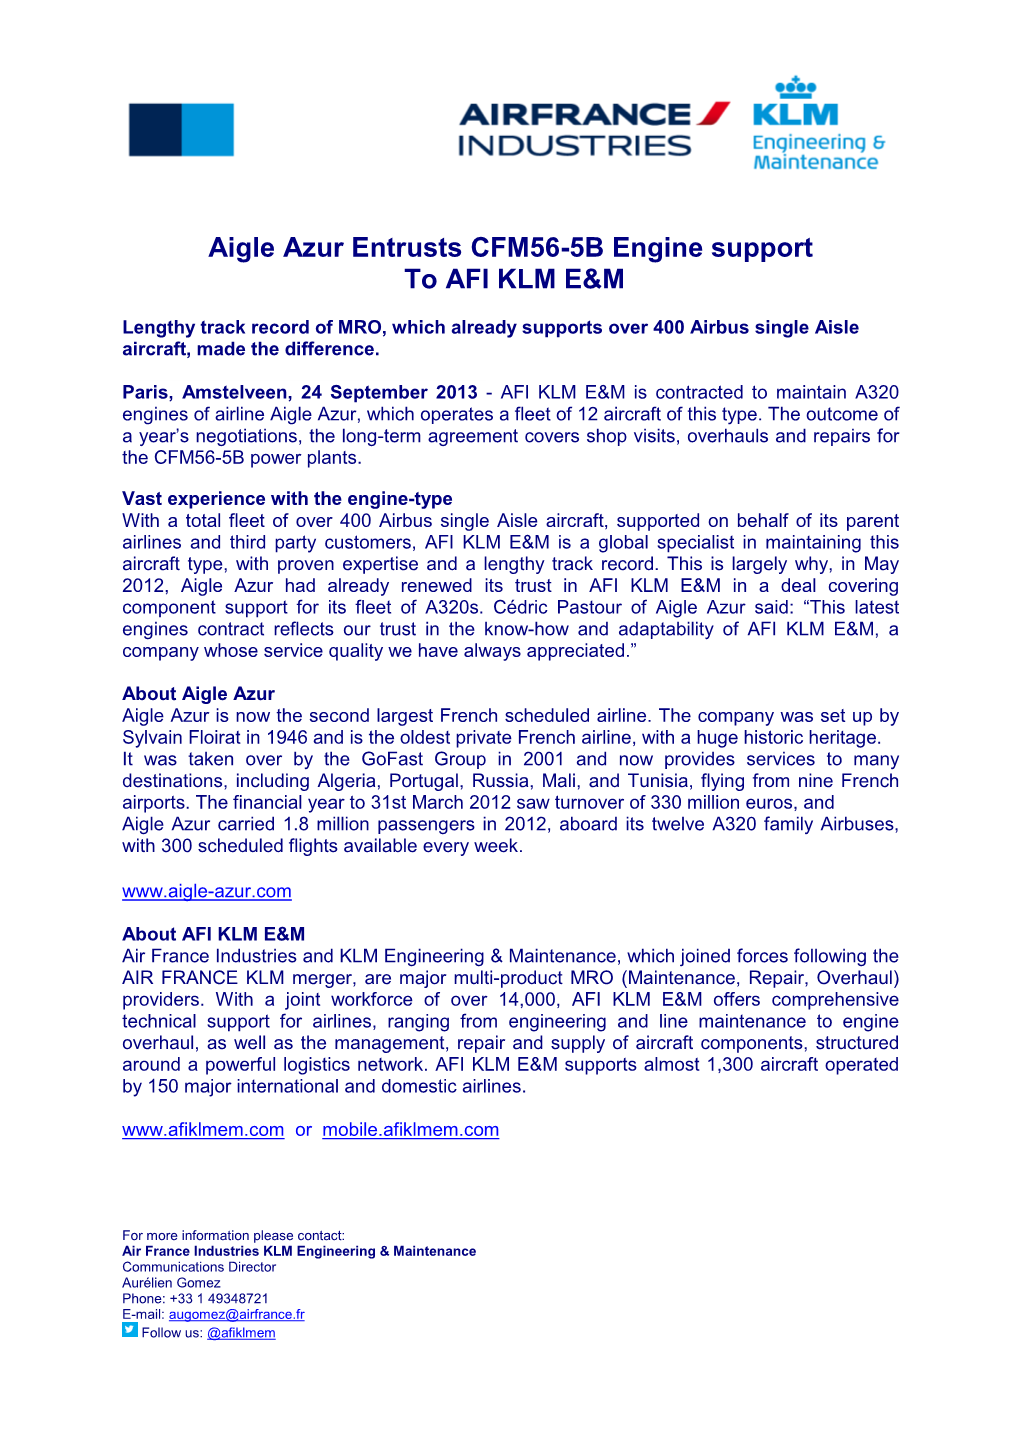 Aigle Azur Entrusts CFM56-5B Engine Support to AFI KLM E&M